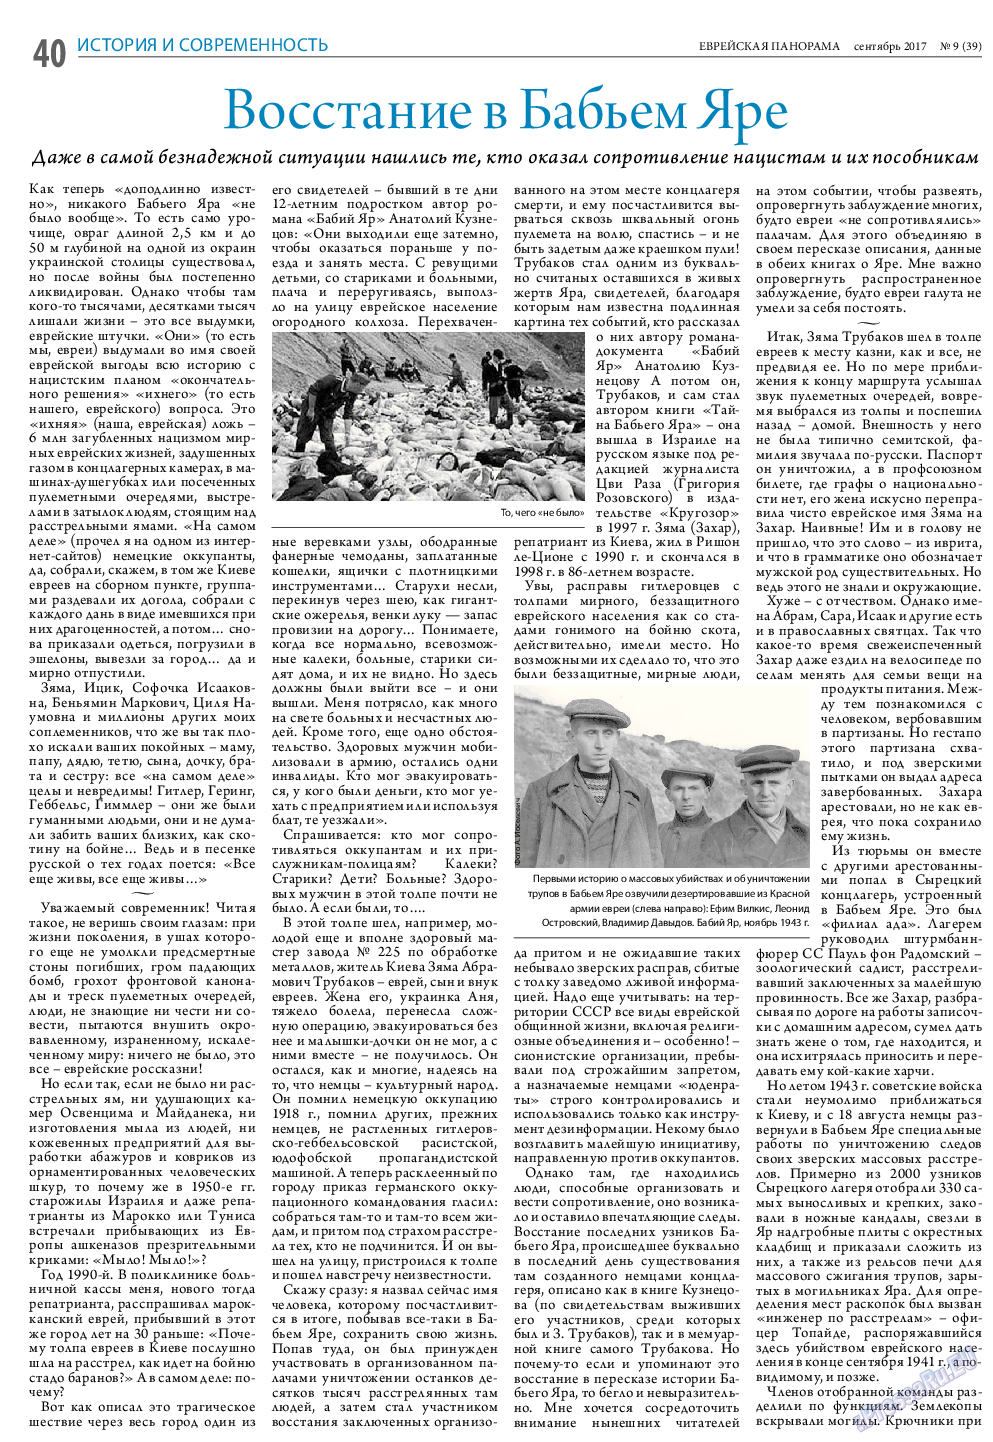 Еврейская панорама, газета. 2017 №9 стр.40